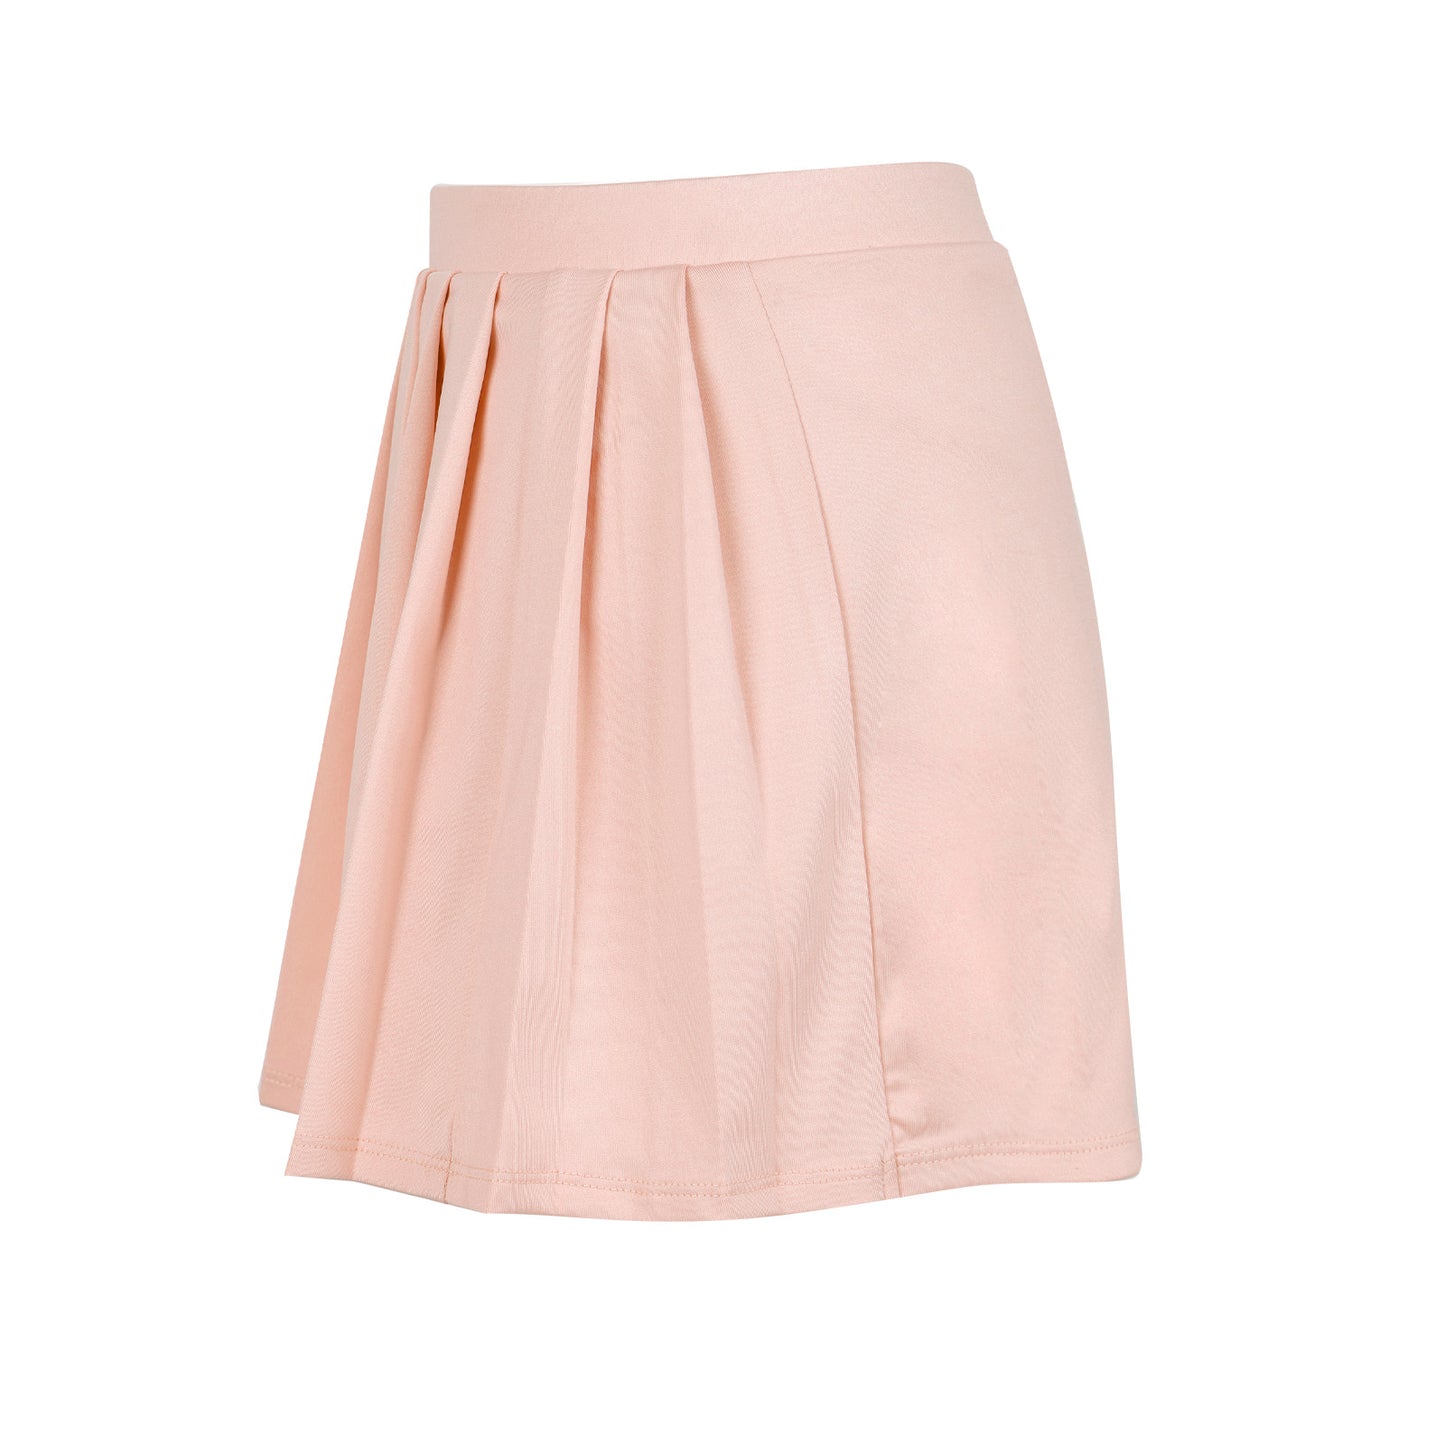 #Carnival Lights Peach Wrap Pleat Skirt - New!